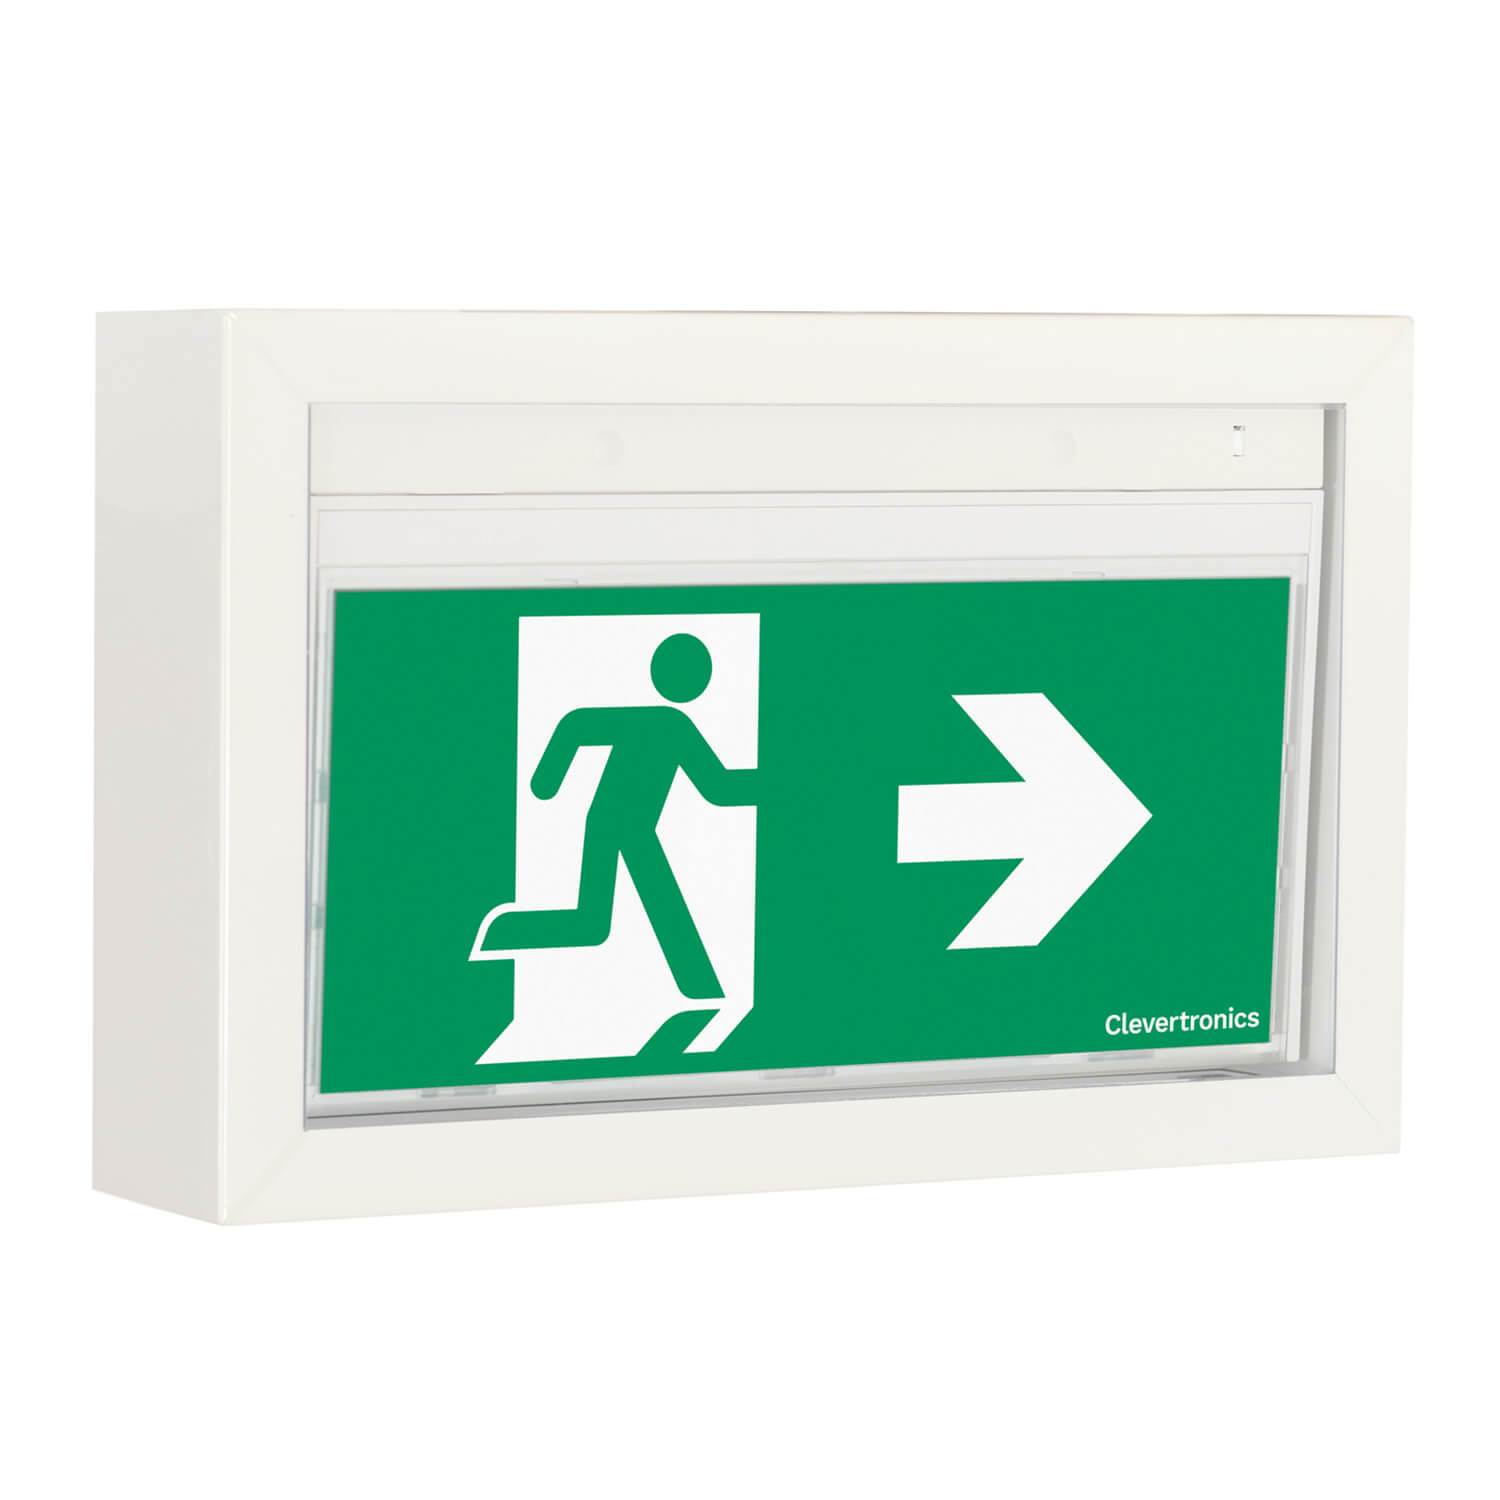 clevertronics emergency lighting exits UK Vandal Resistant